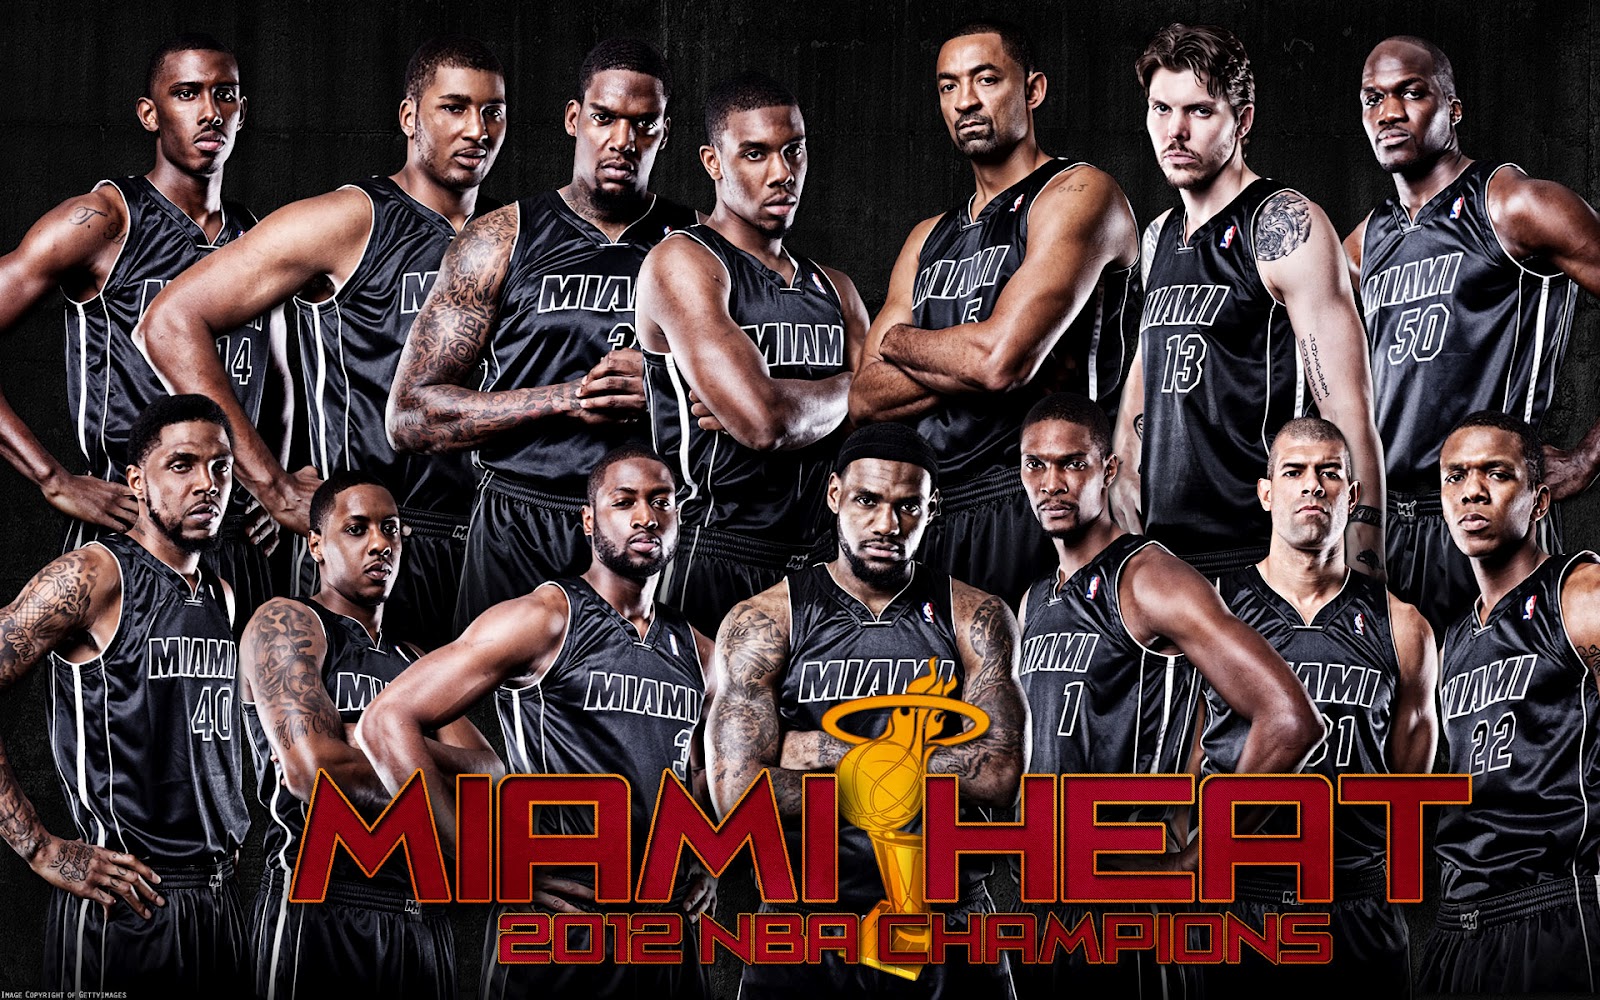 Miami Heat 2012 NBA Champions Roster Wallpaper ~ Big Fan of NBA - Daily ...